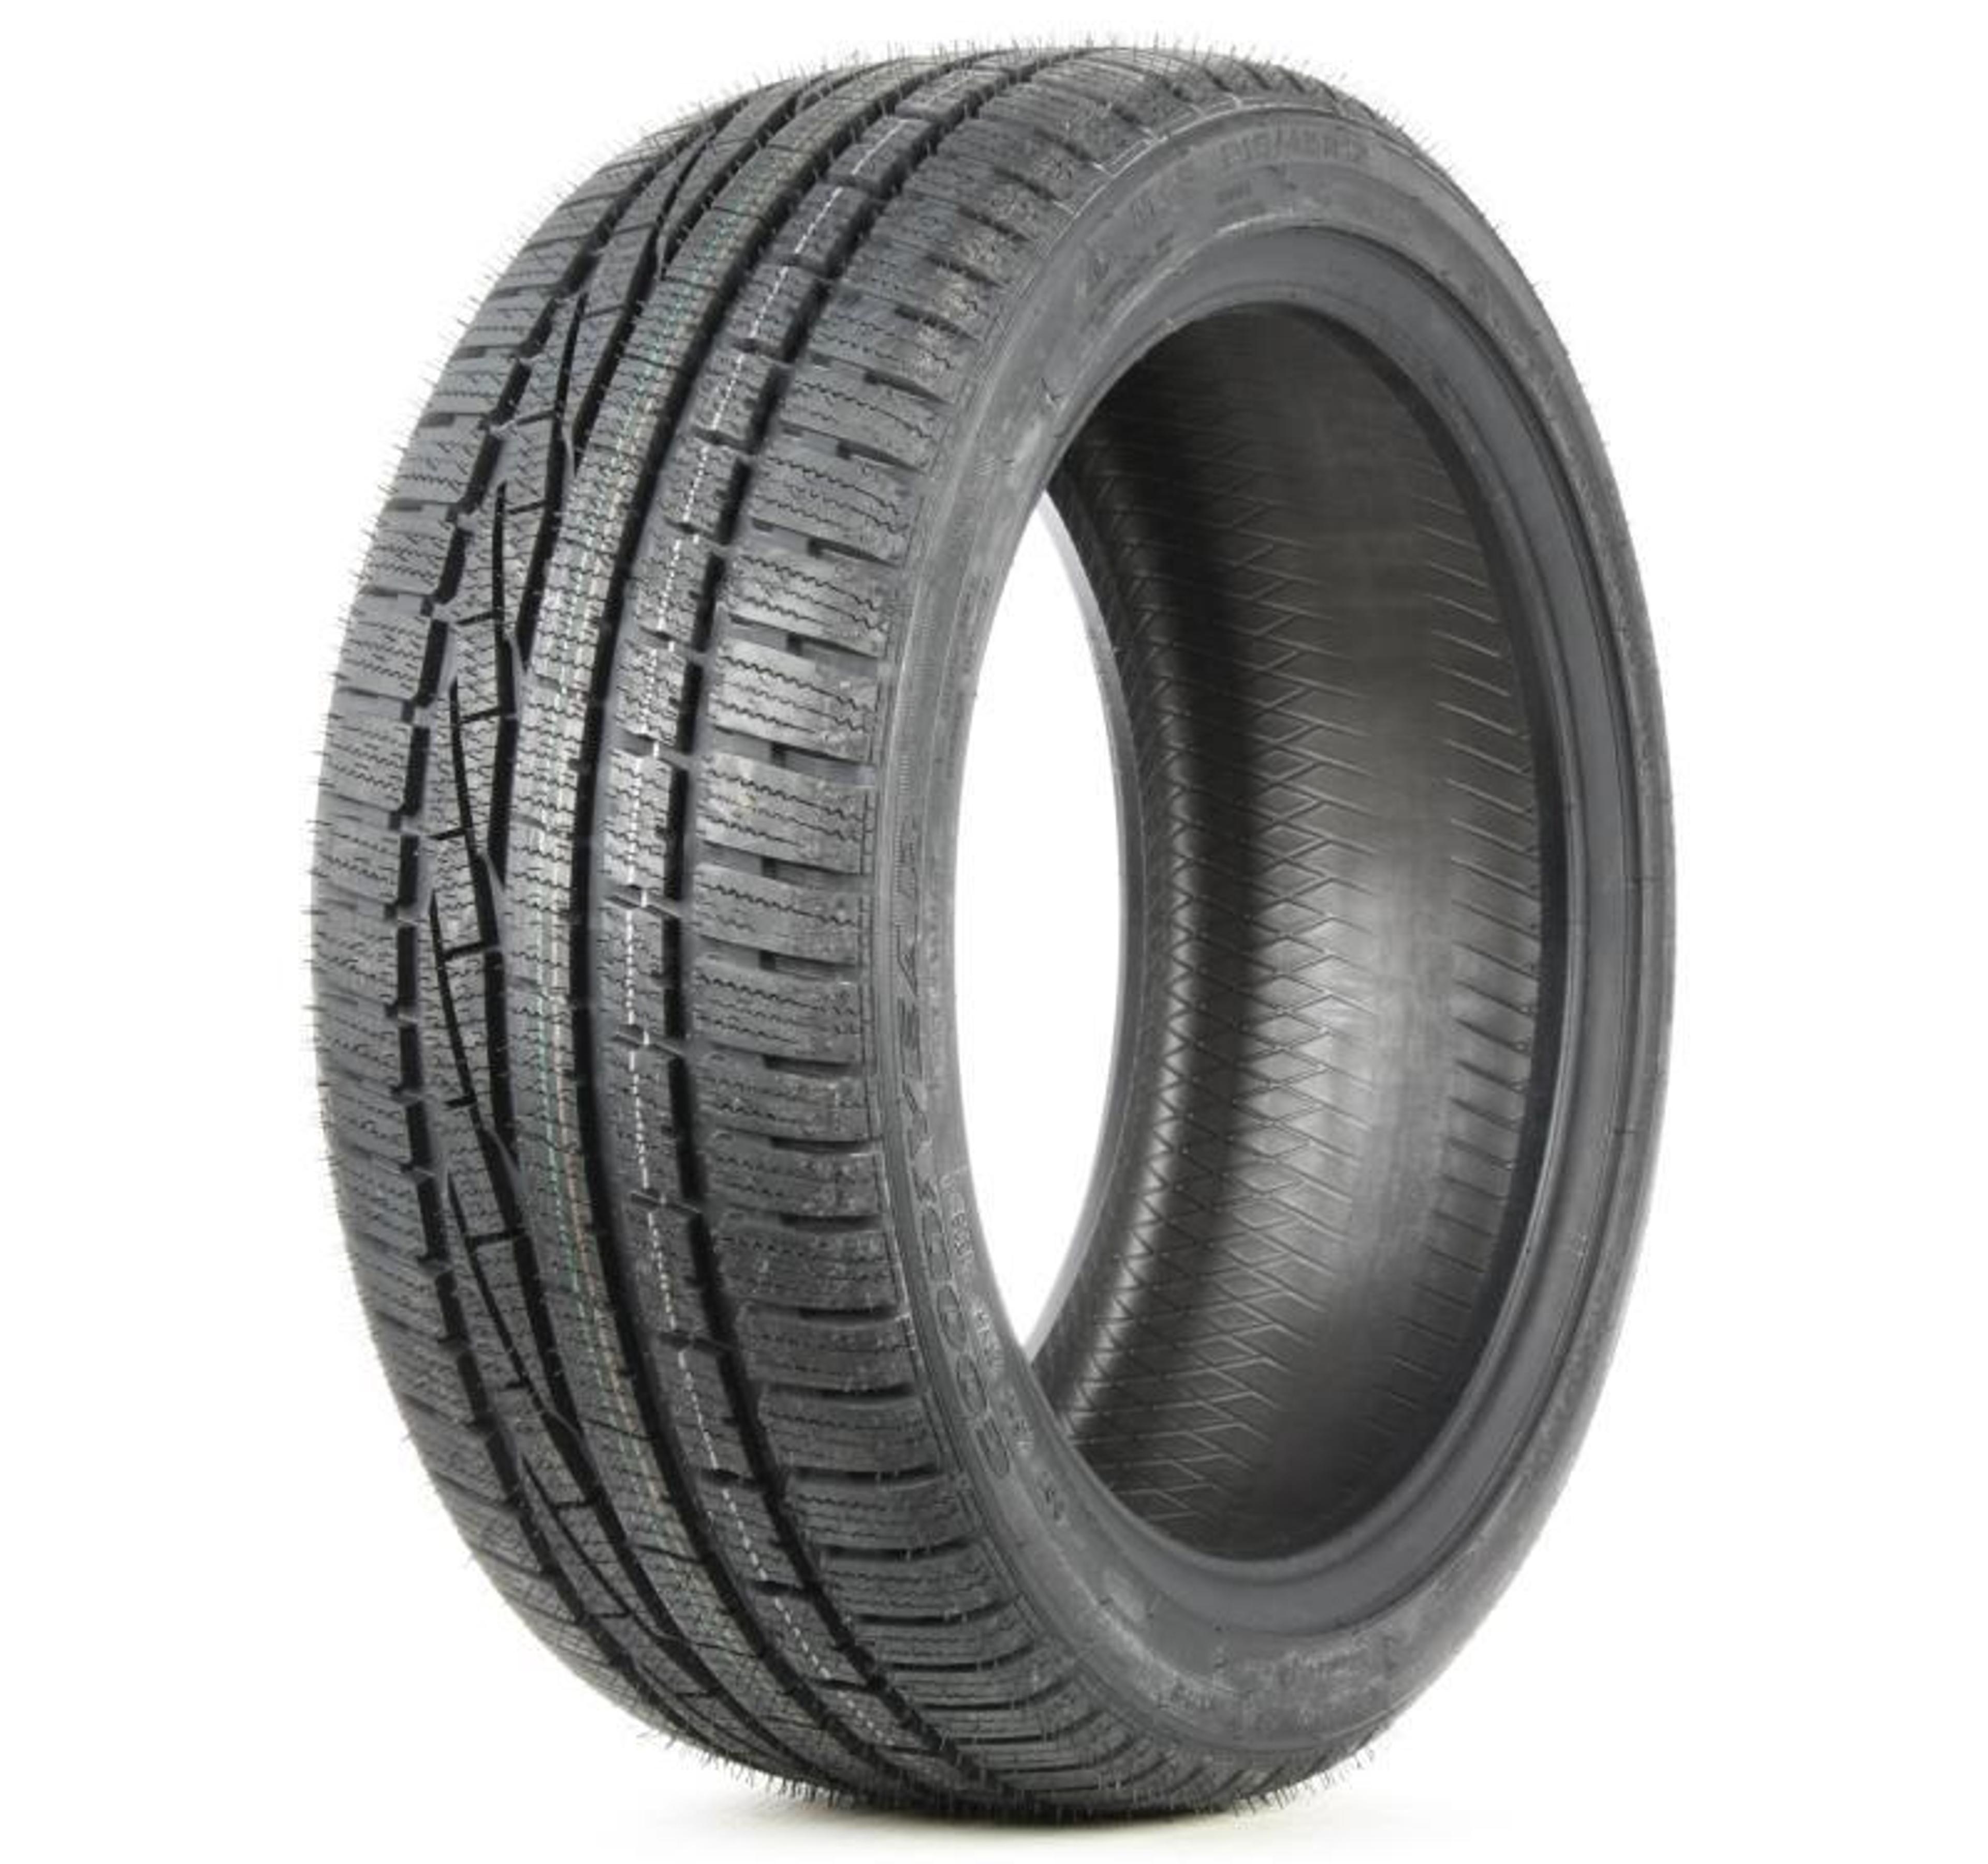 Tires SimpleTire Buy Goodyear Performance Online Ultra | Grip